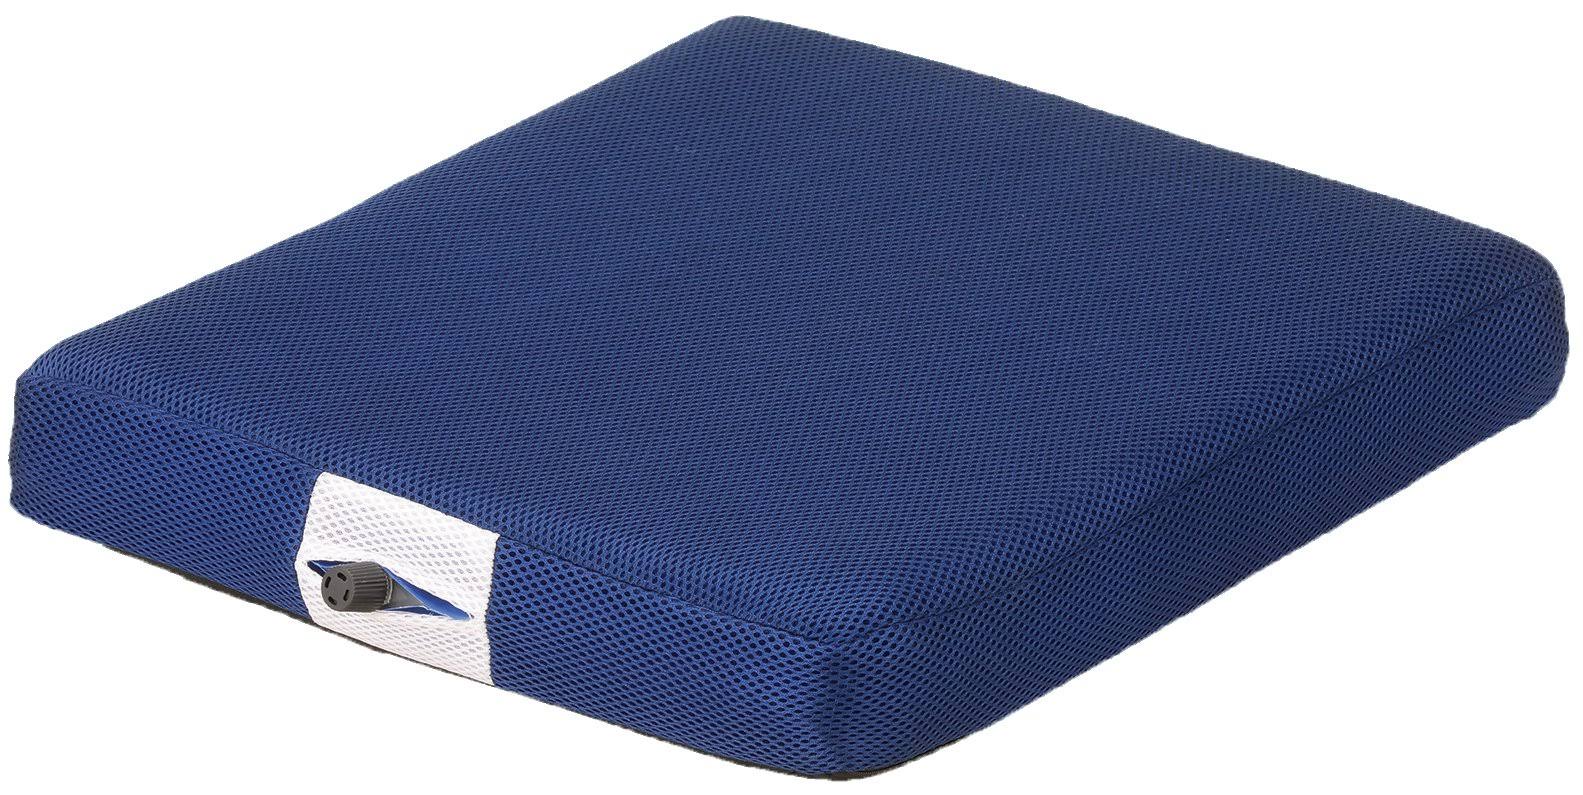 Nova Medical Products Easy Air Seat Cushion - Blue